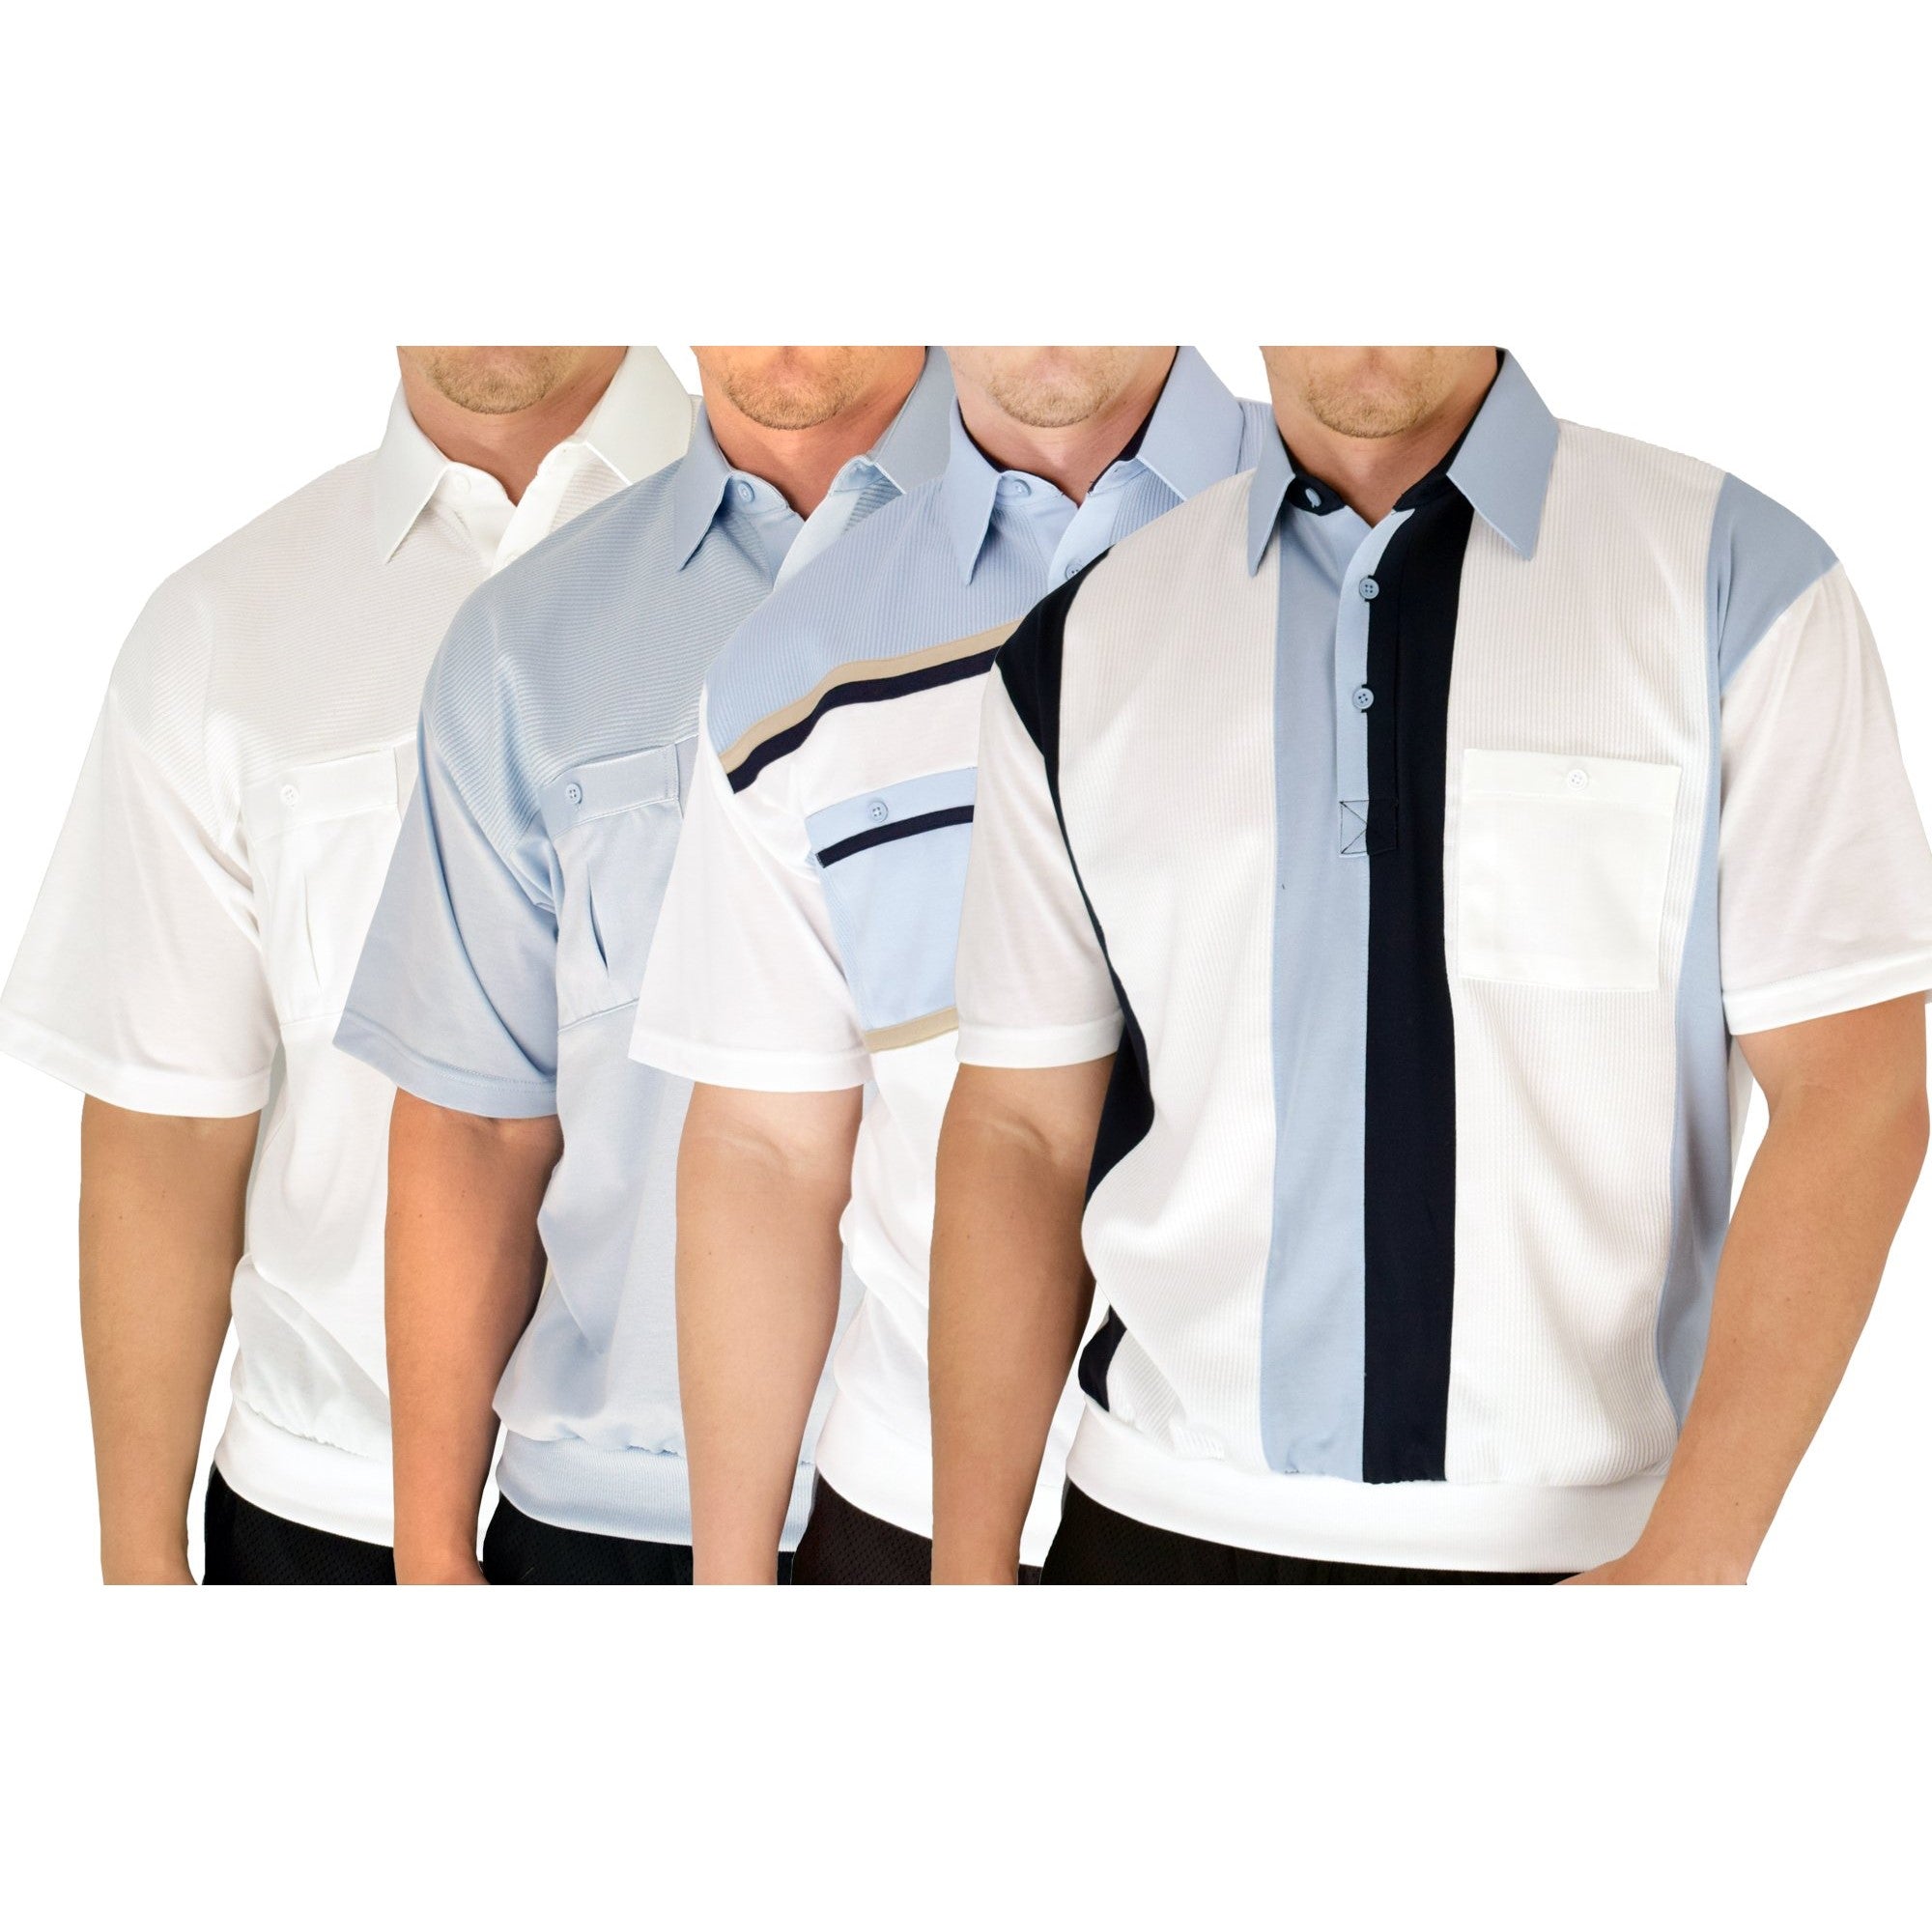 Best of the Blues- 4 Short Sleeve Shirts Bundled